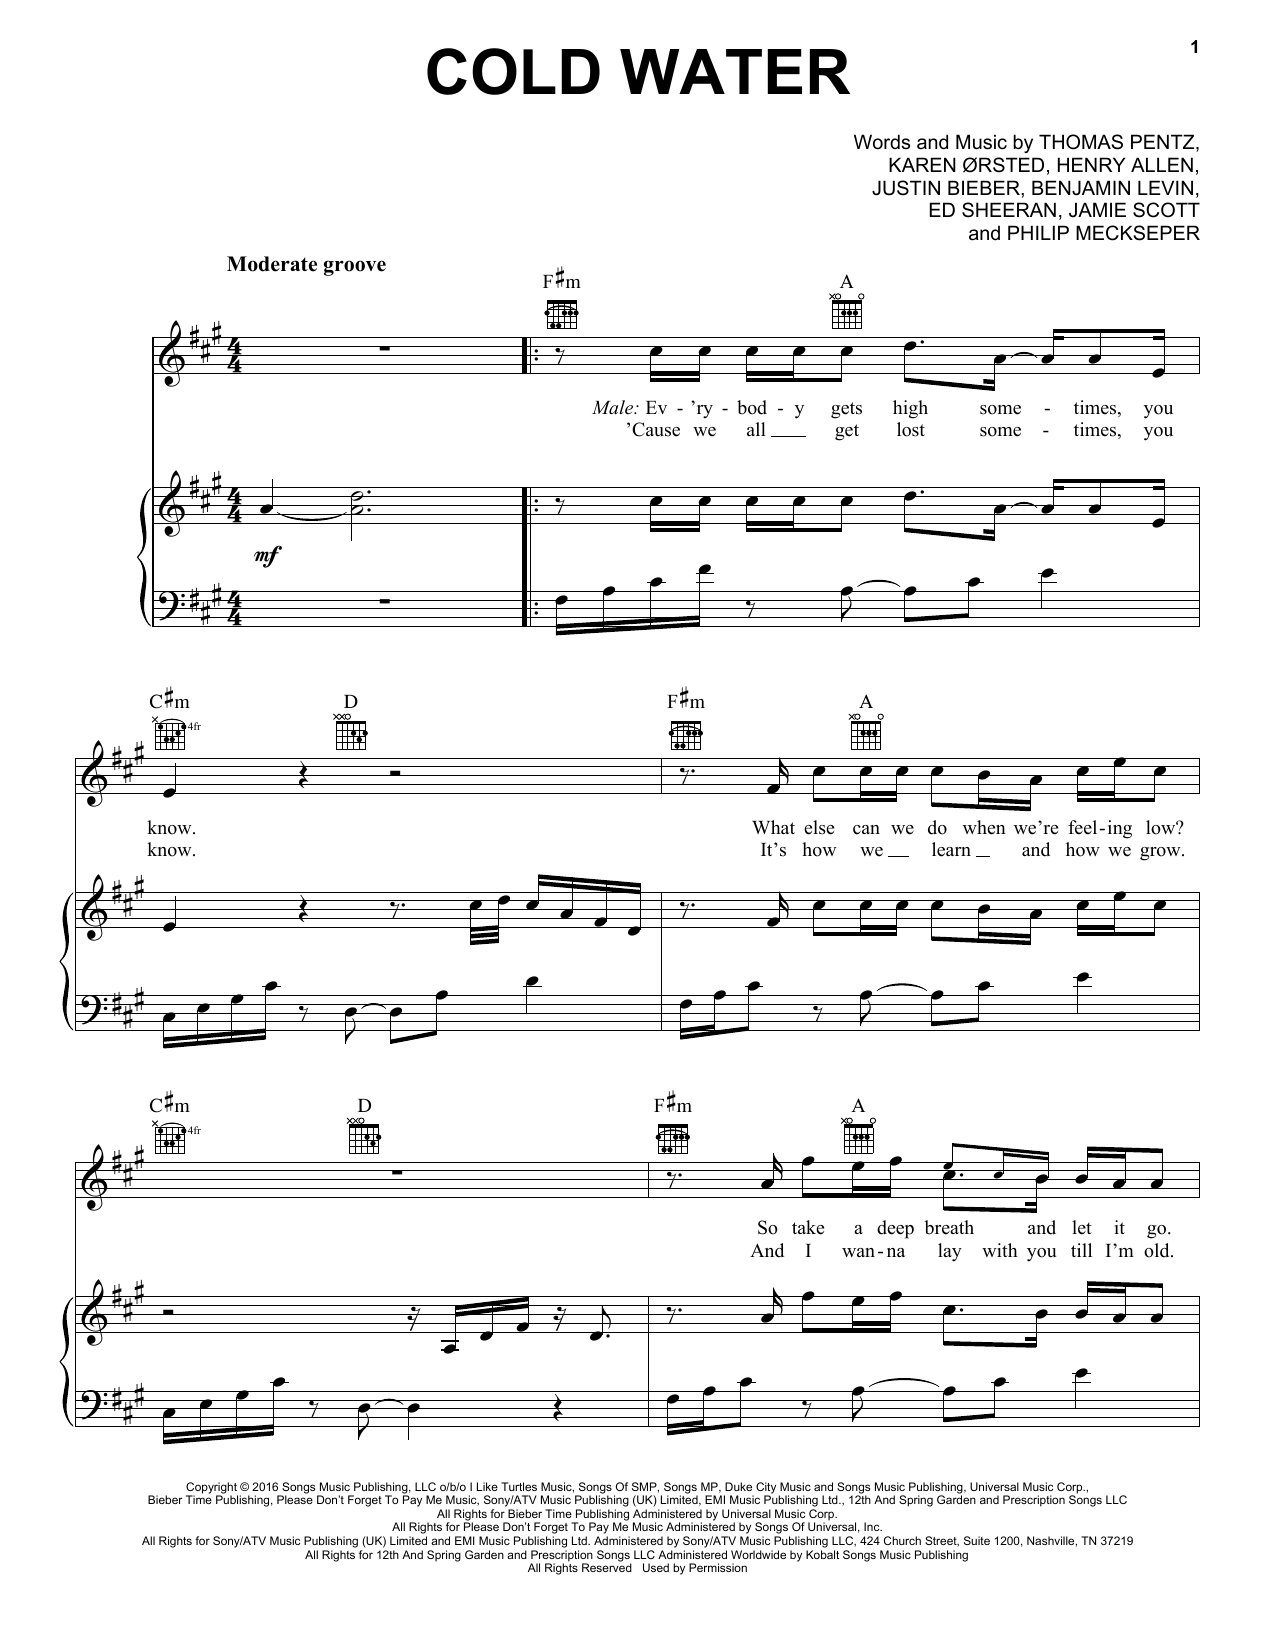 Cold Water Chords Sheet Music Digital Files To Print Licensed Henry Allen Digital